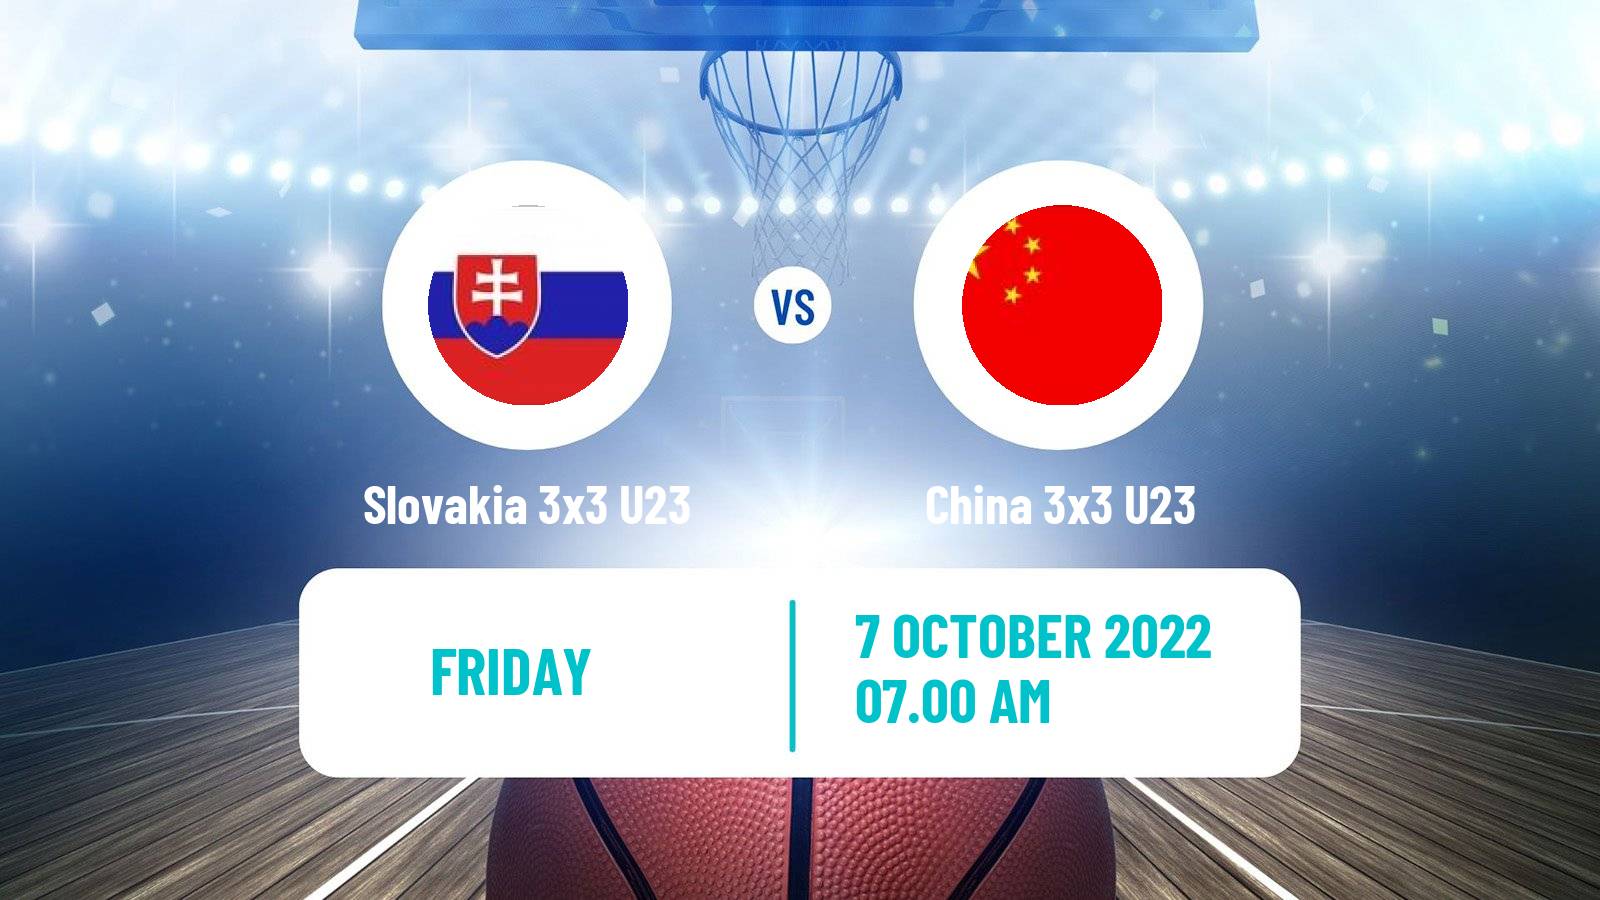 Basketball World Cup Basketball 3x3 U23 Slovakia 3x3 U23 - China 3x3 U23